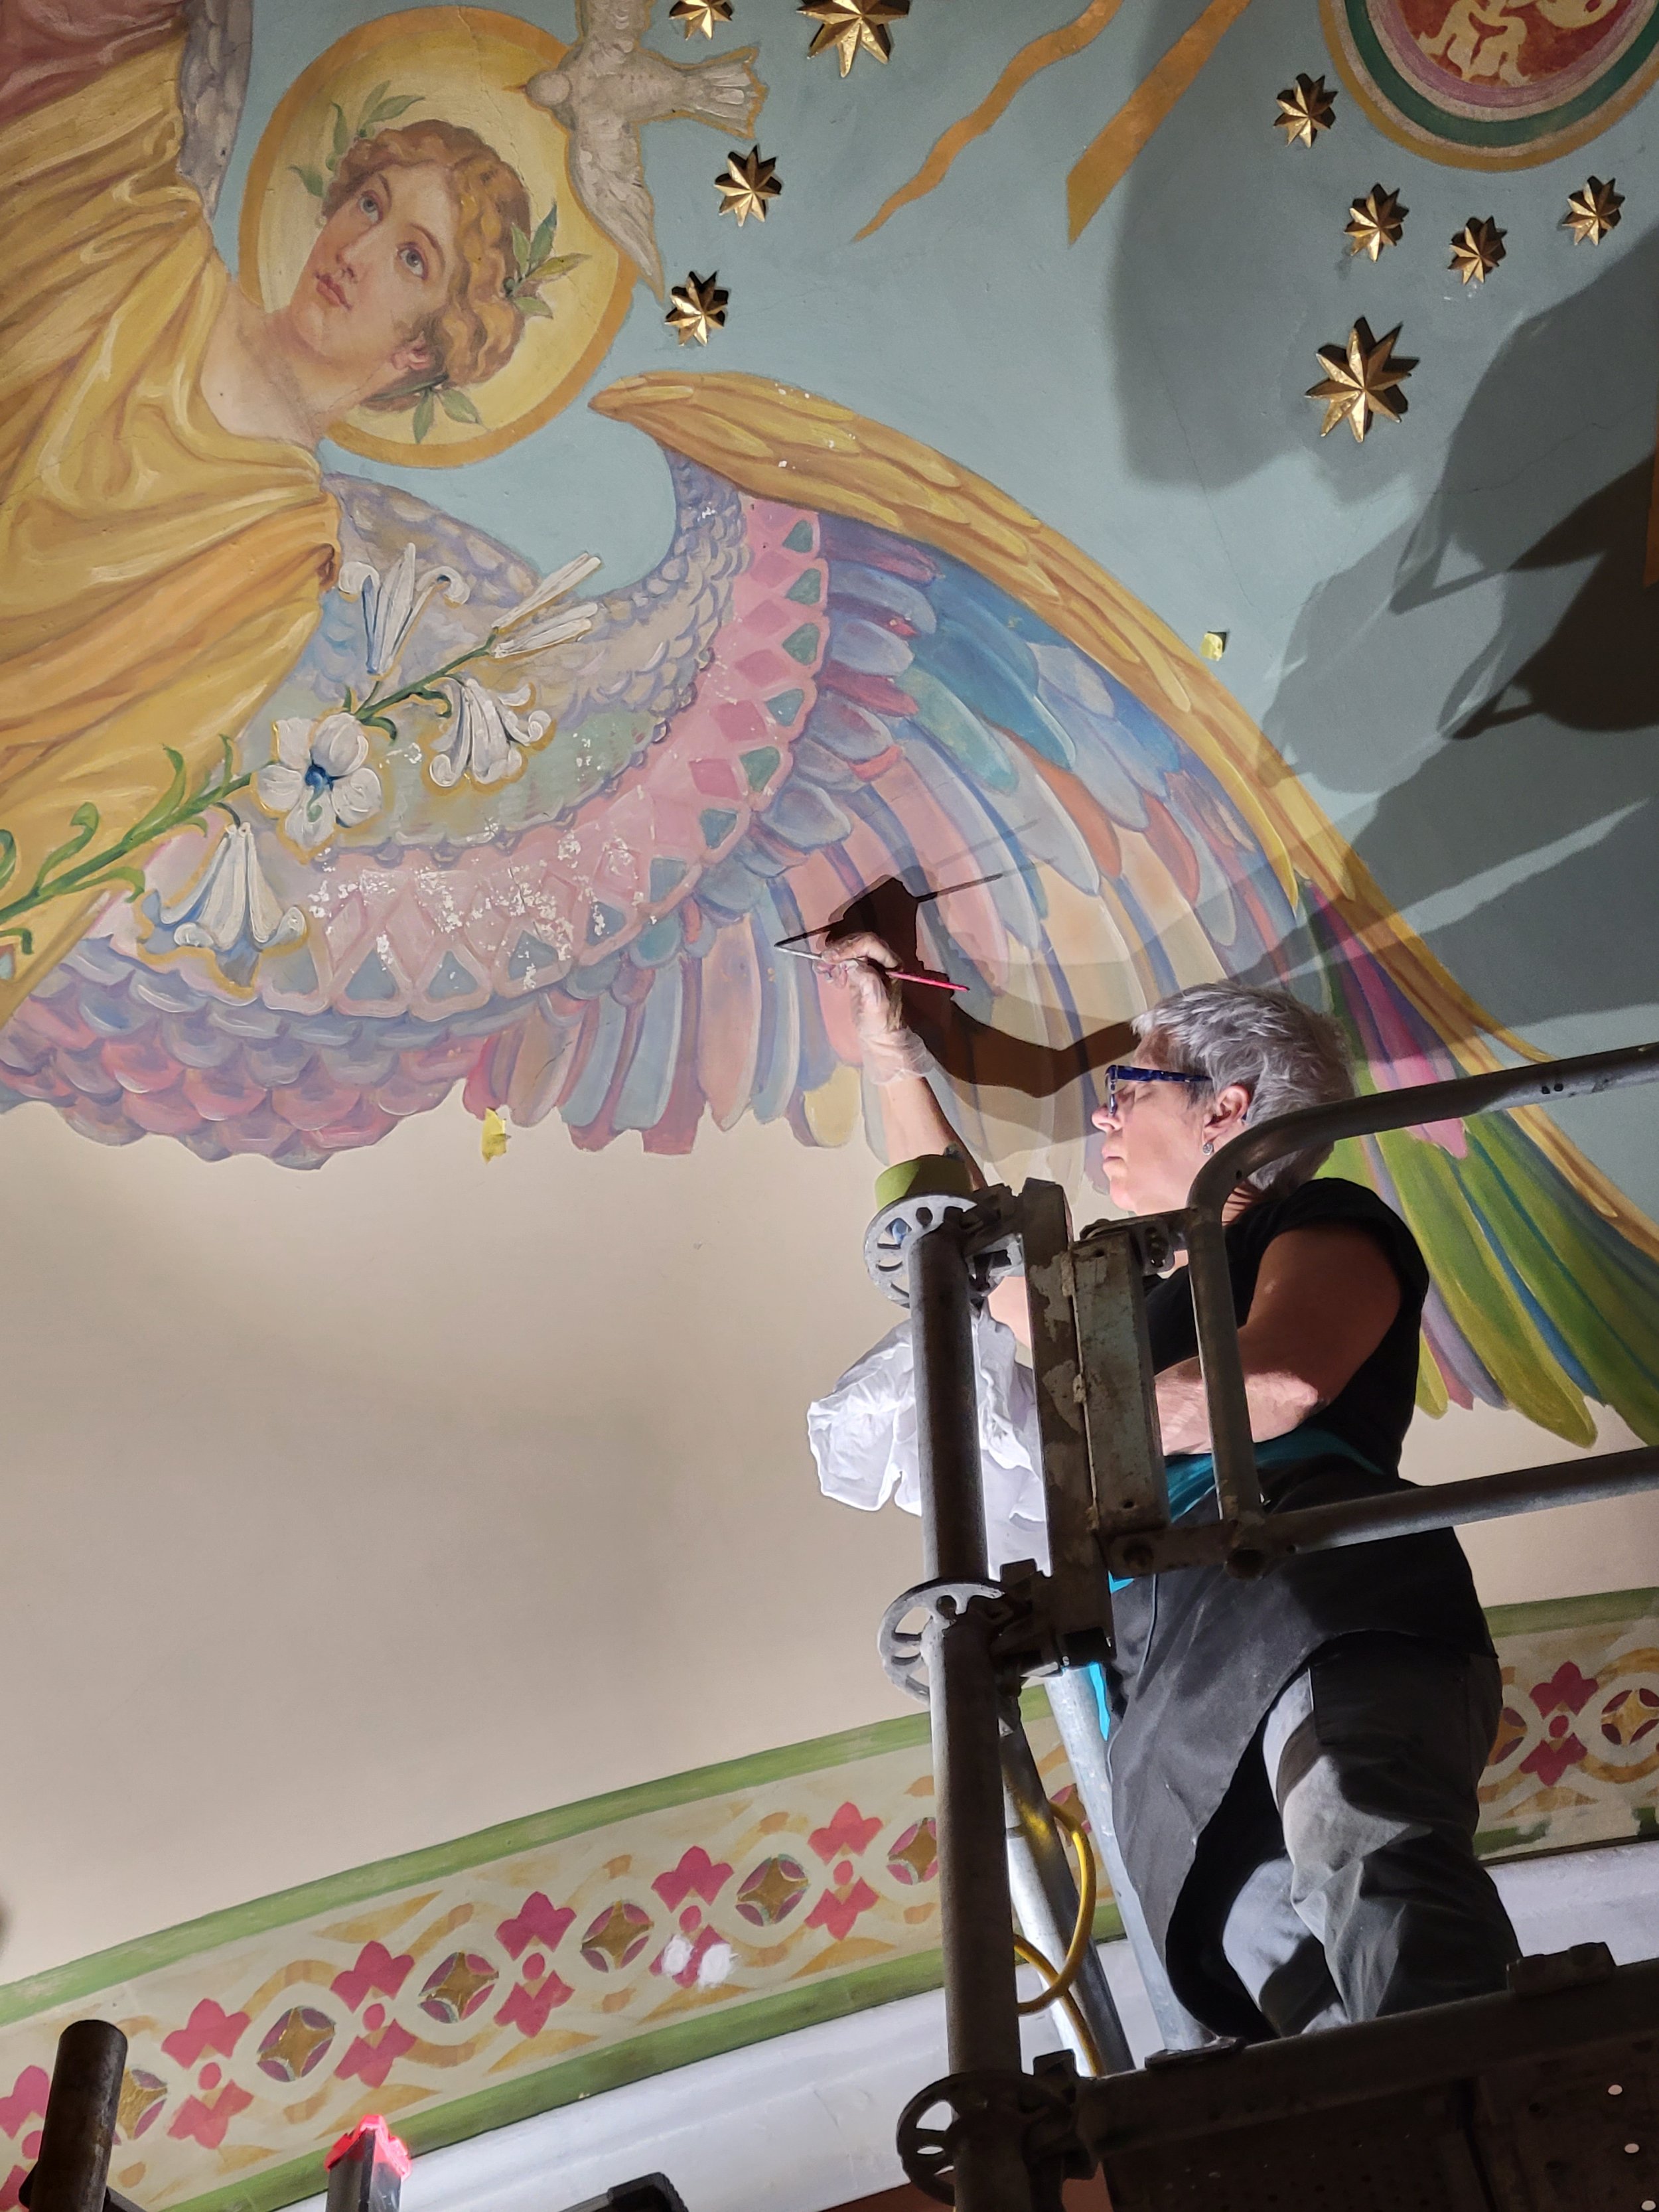 Lori LeMare Studio team retouching frescos